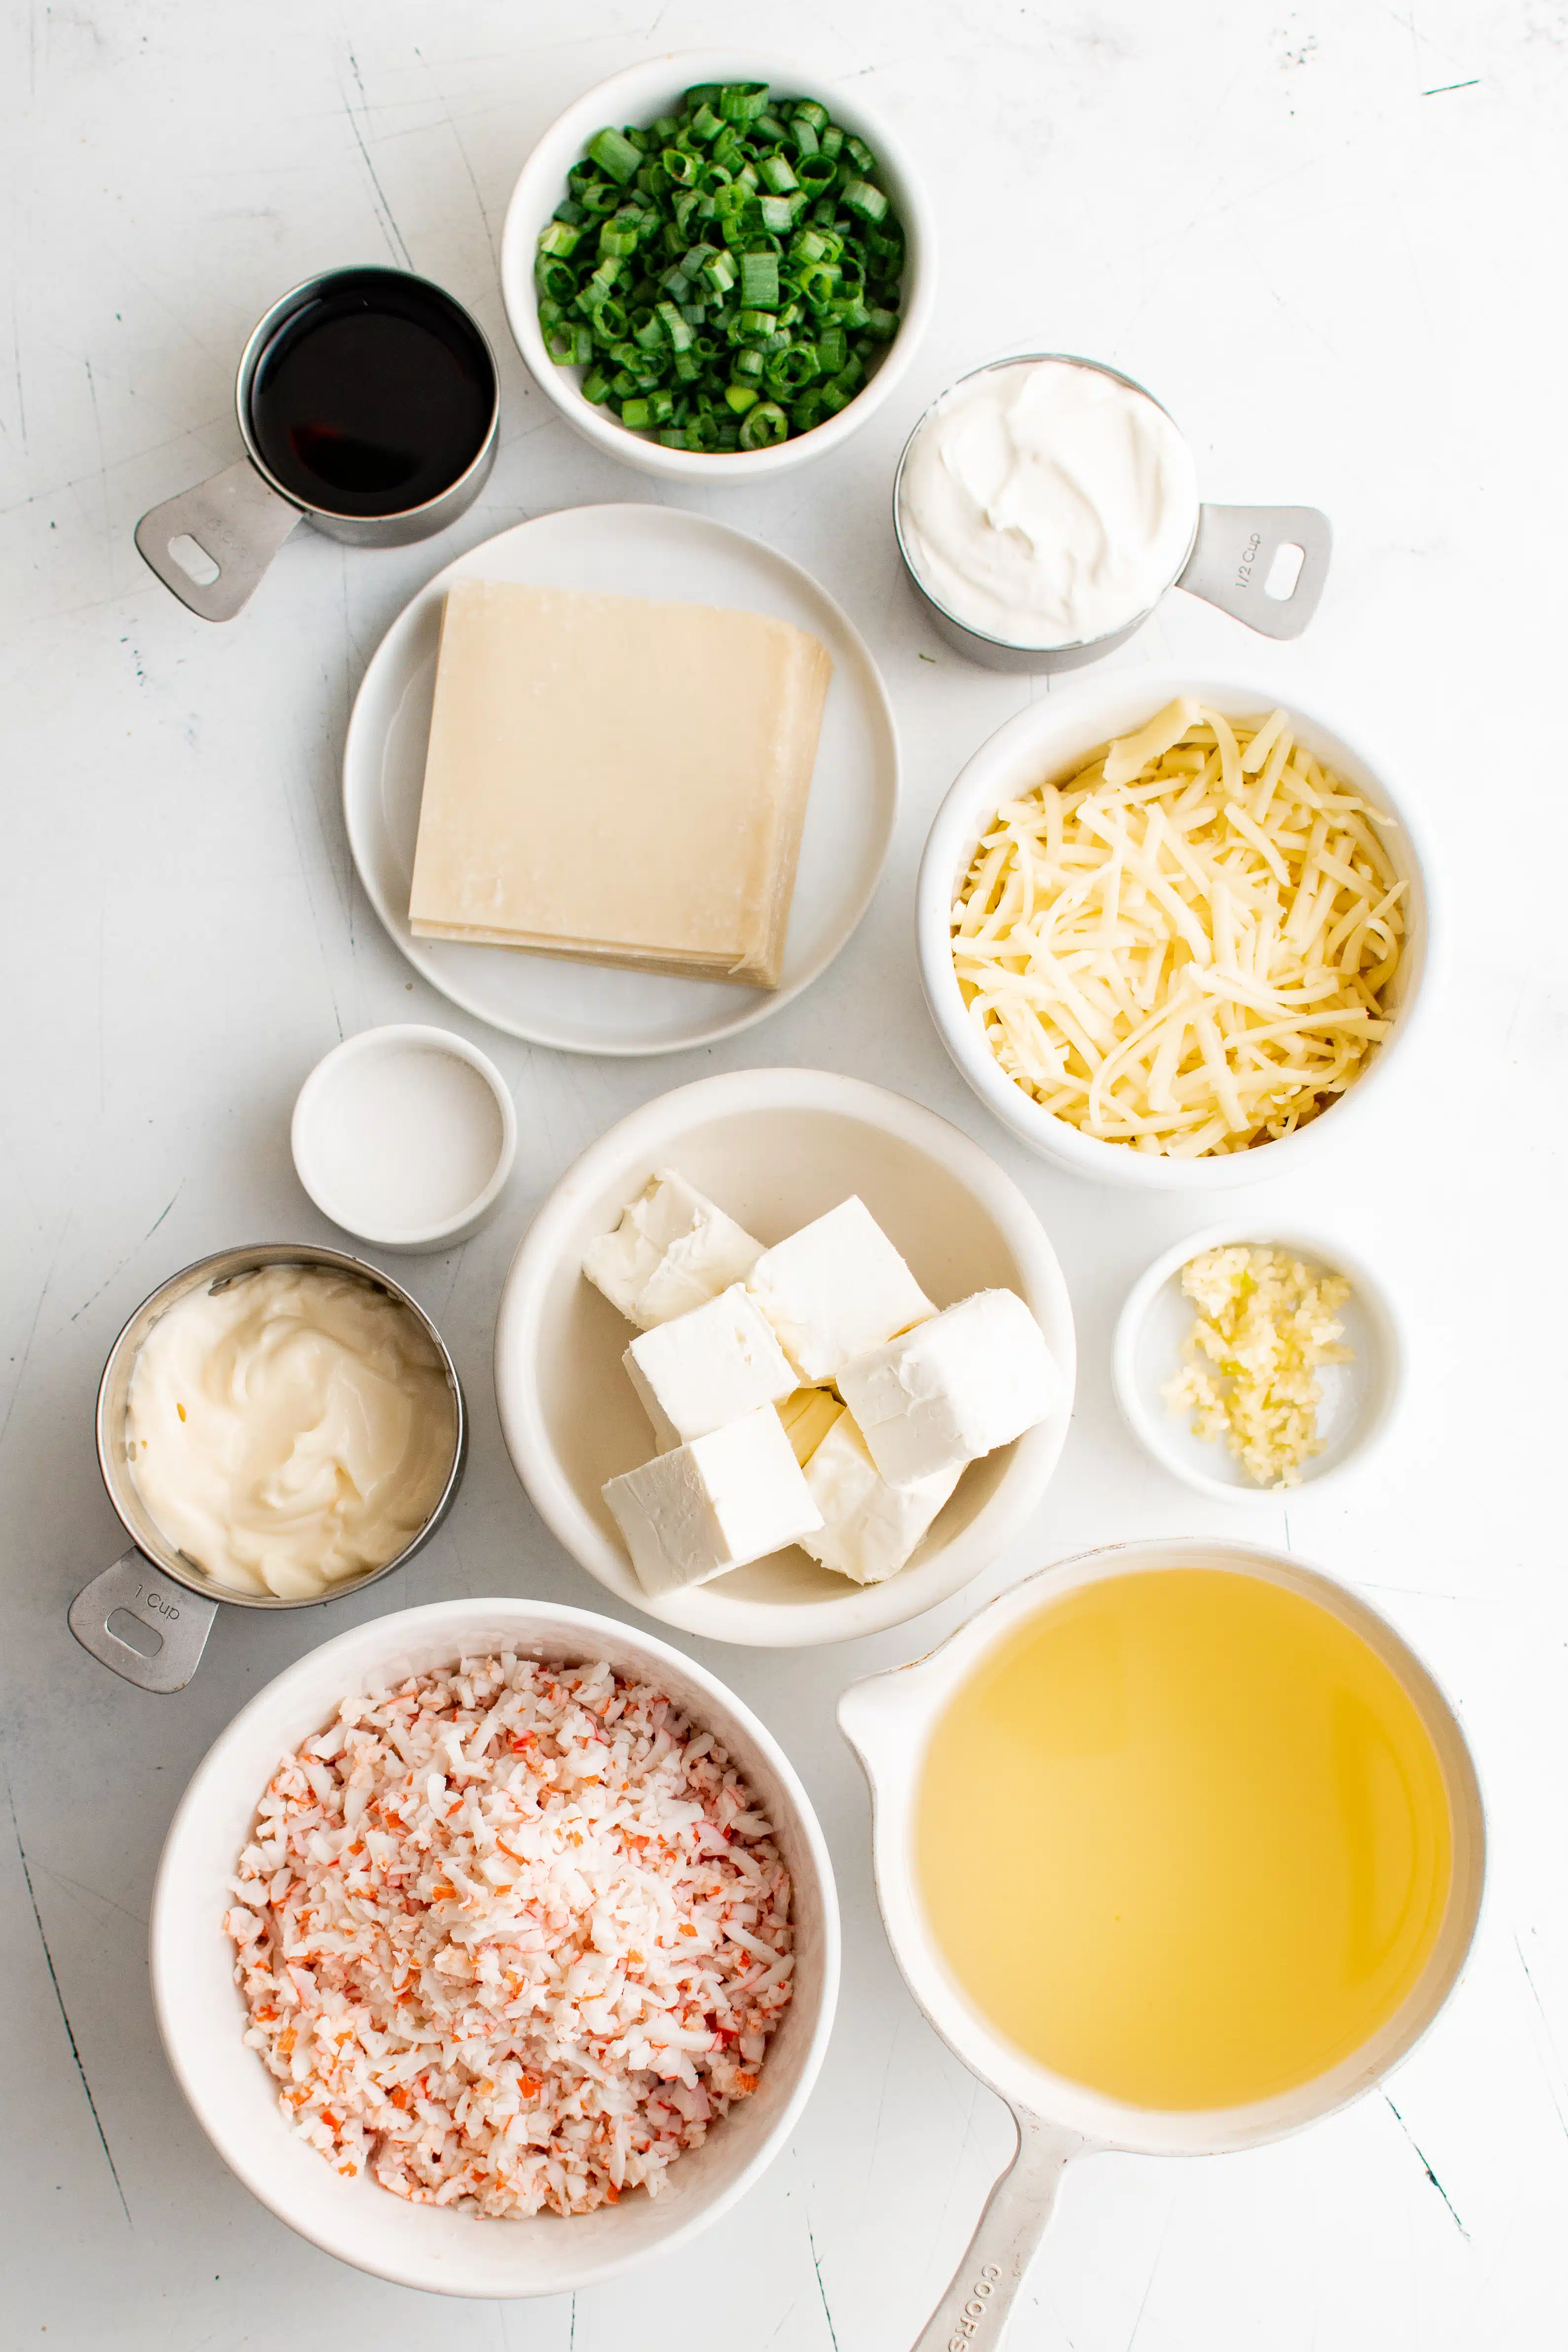 Ingredients for crab rangoon dip set aside in individual bowls.